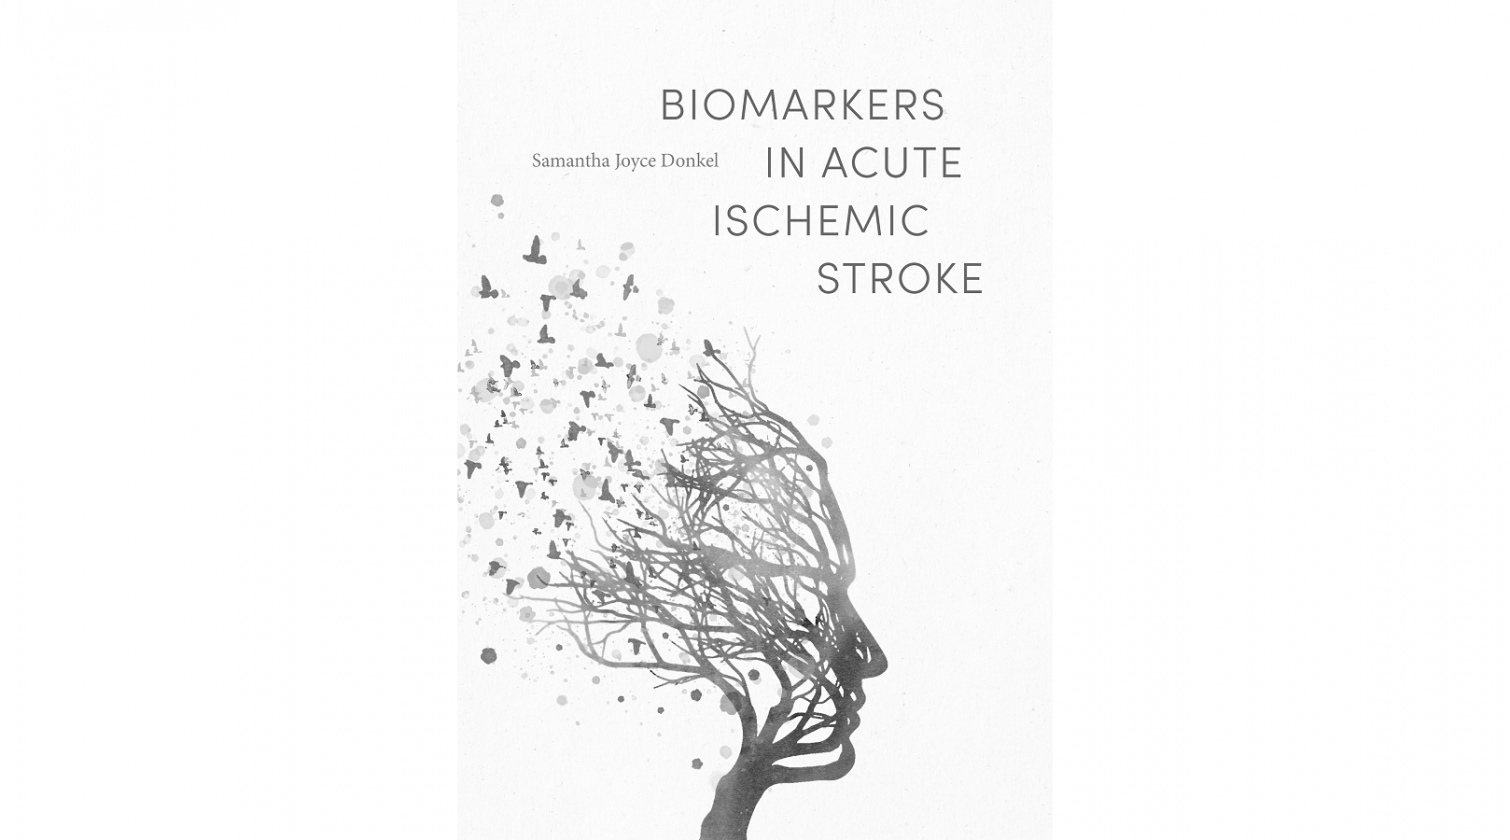 Omslag proefschrift 'Biomarkers in acute ischemic stroke'